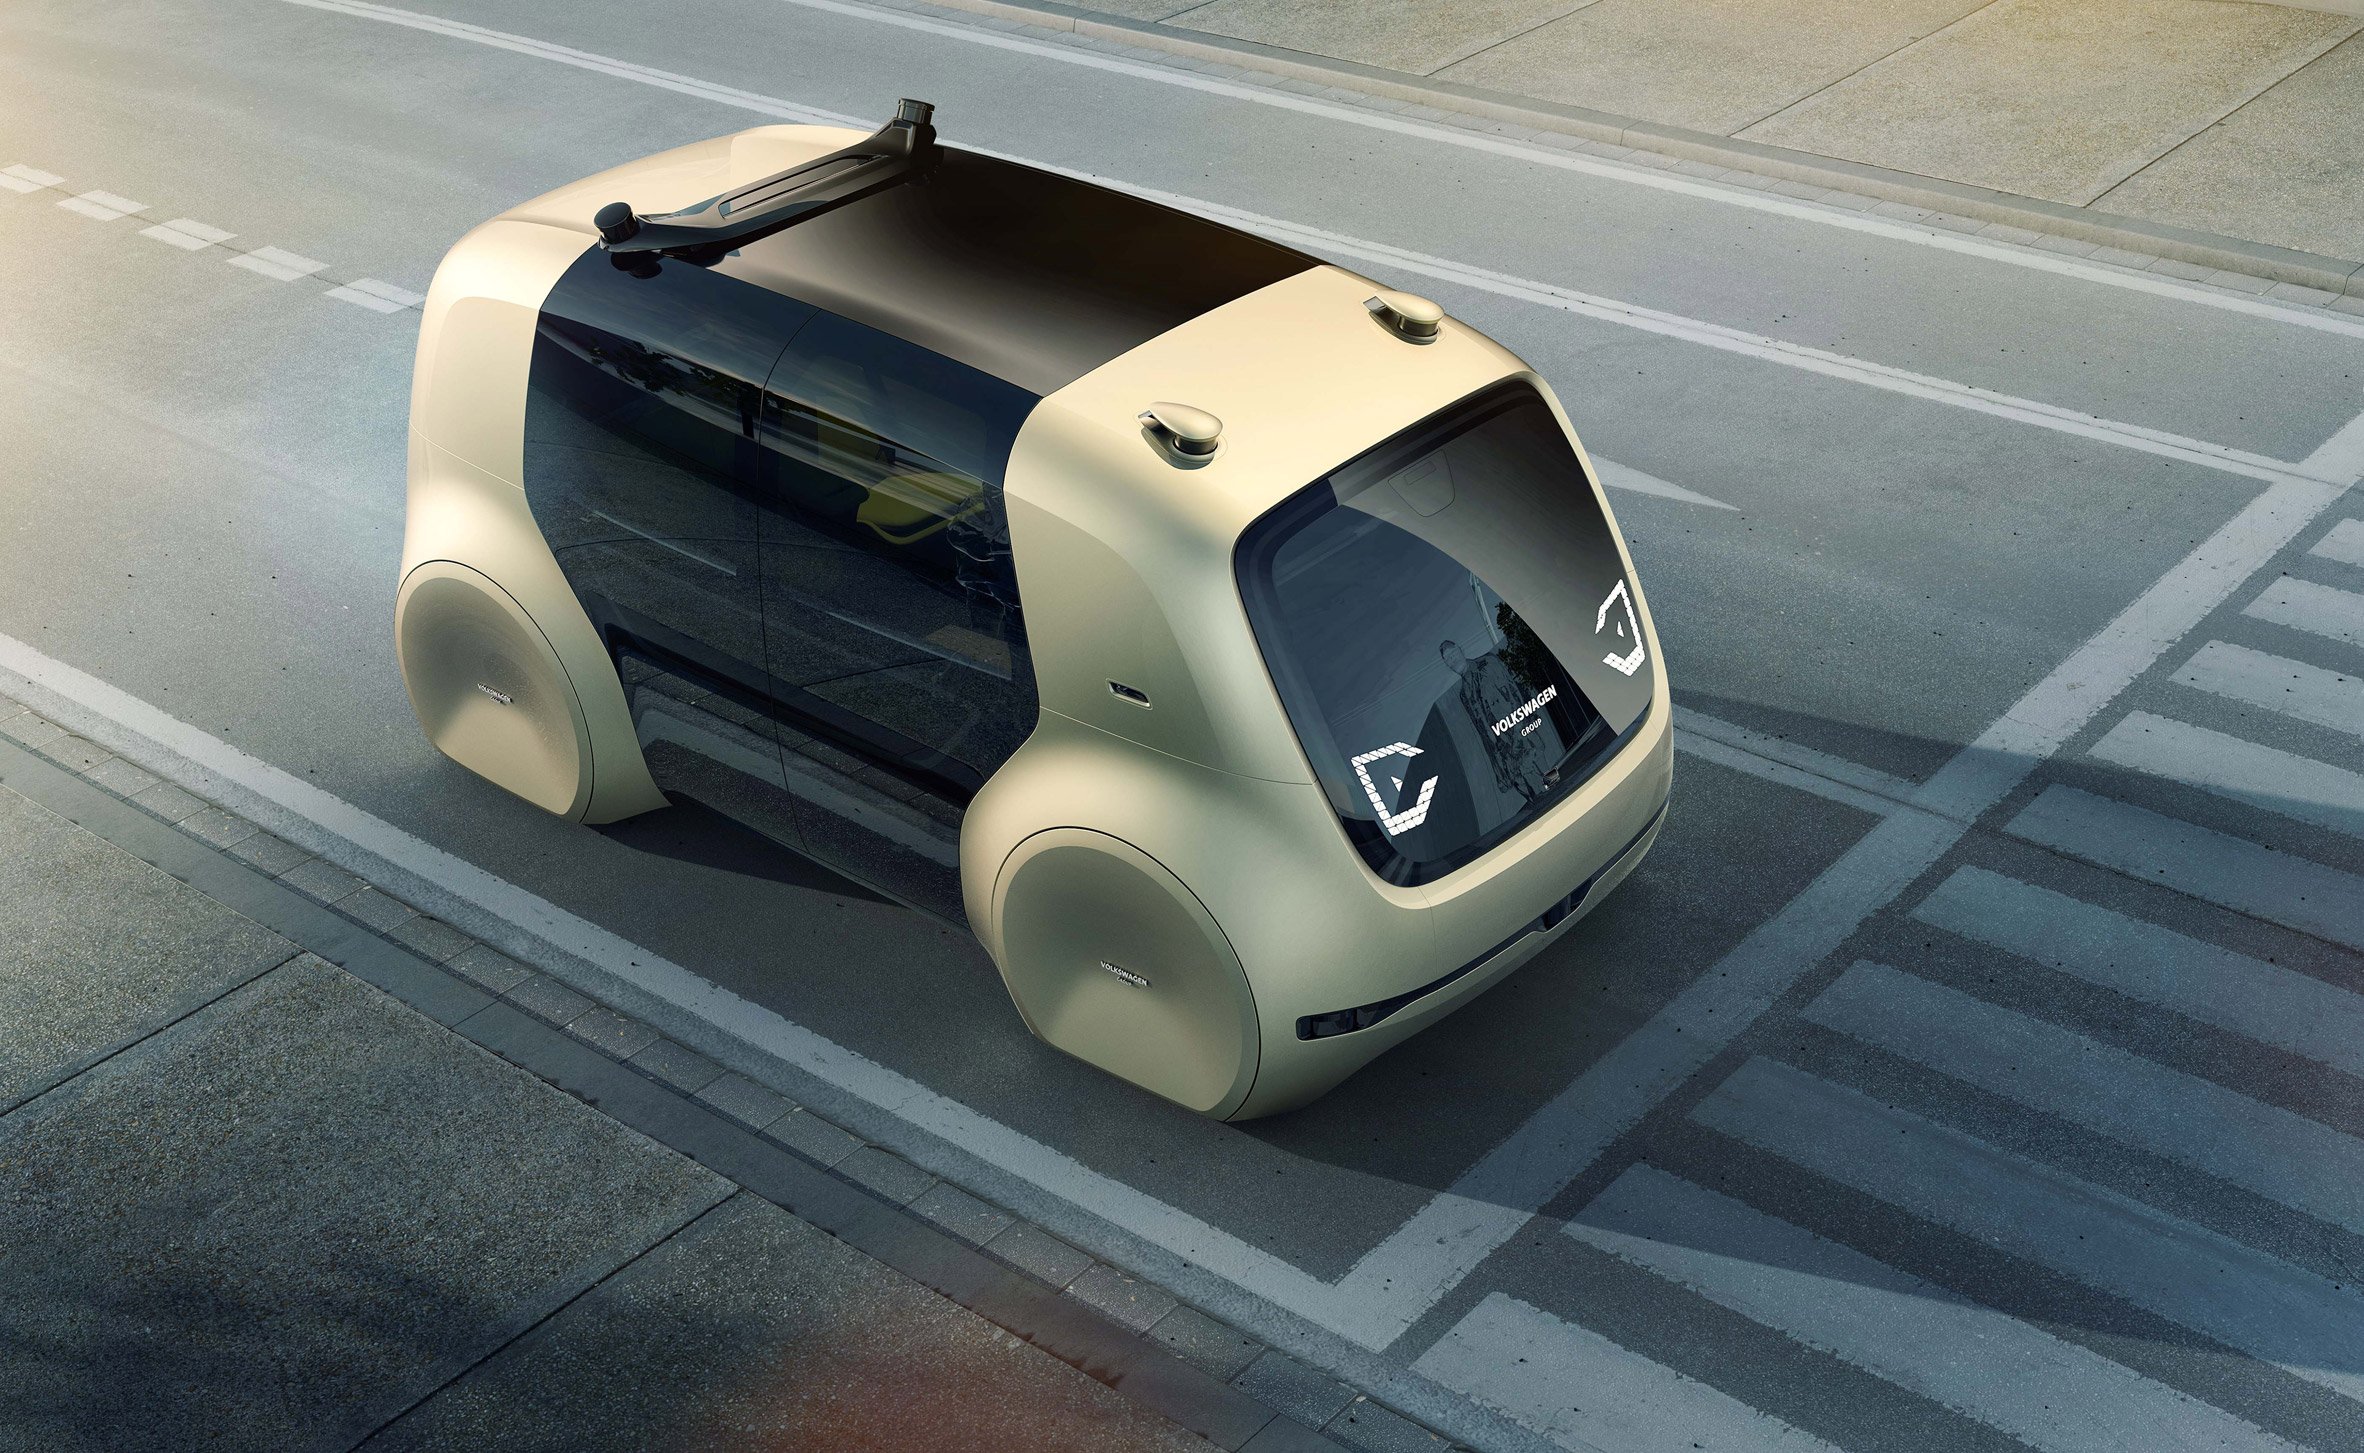 Volkswagen Sedric concept car